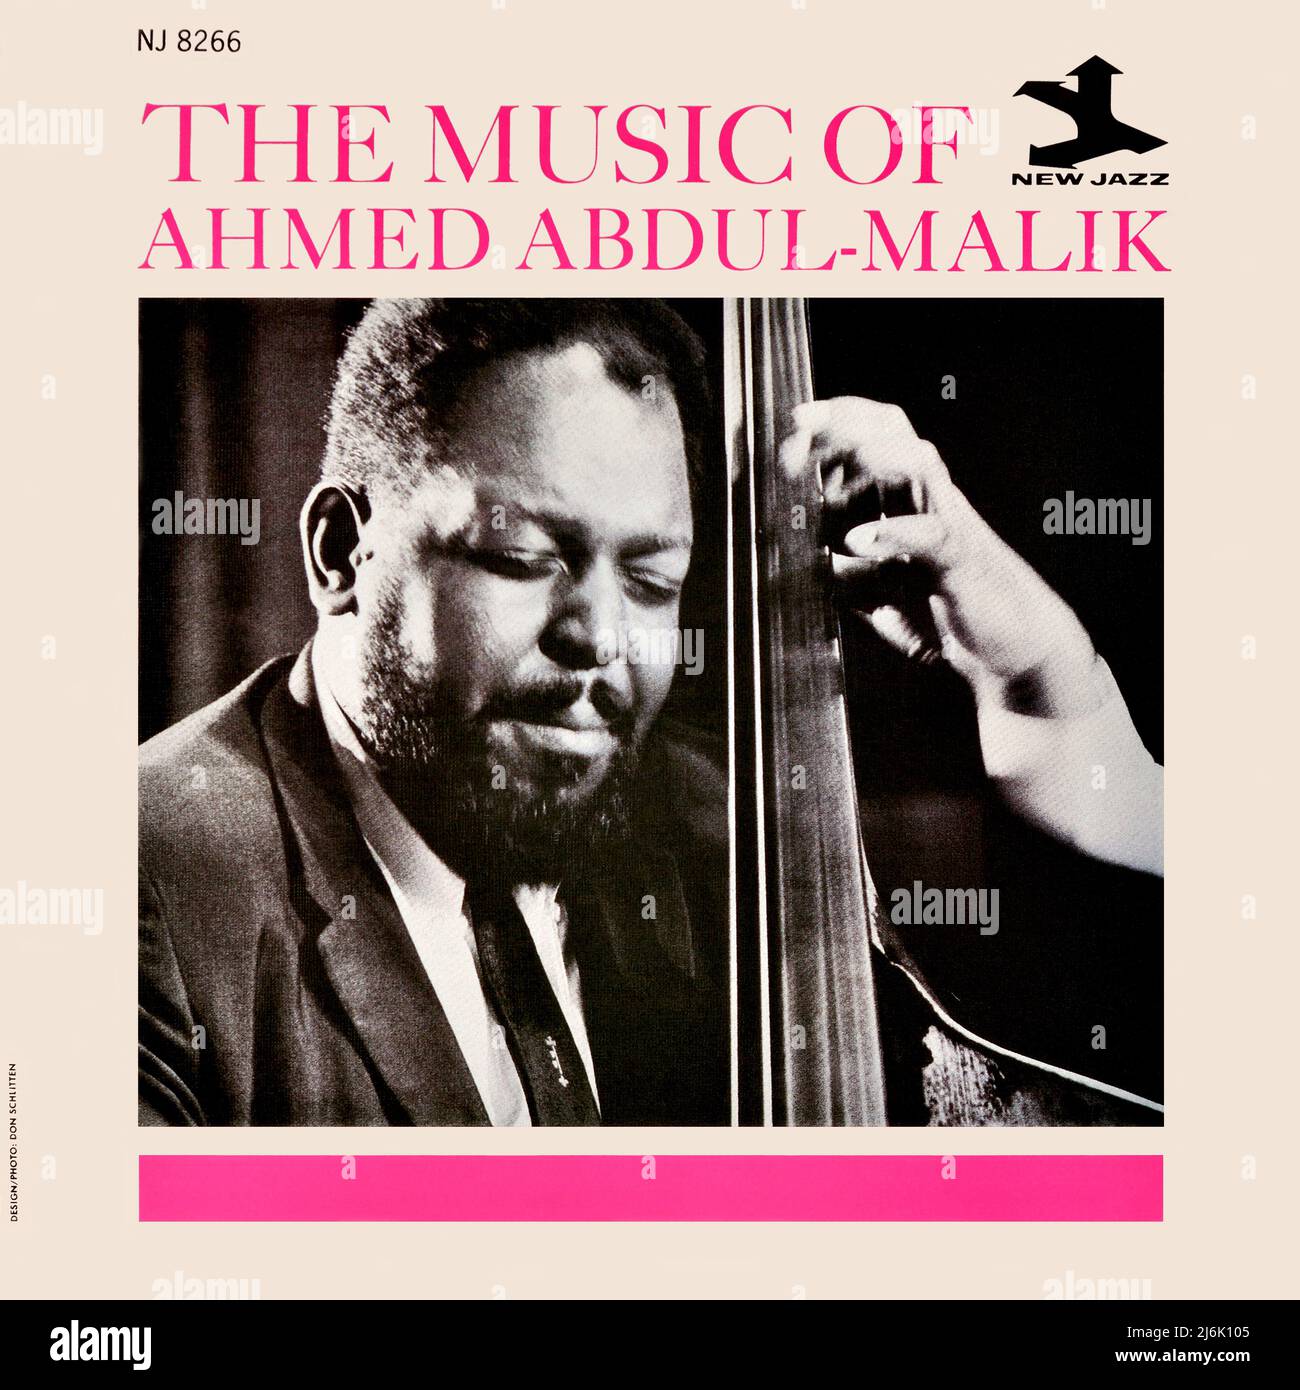 Ahmed Abdul-Malik - original vinyl album cover - The Music Of Ahmed Abdul-Malik - 1961 Stock Photo